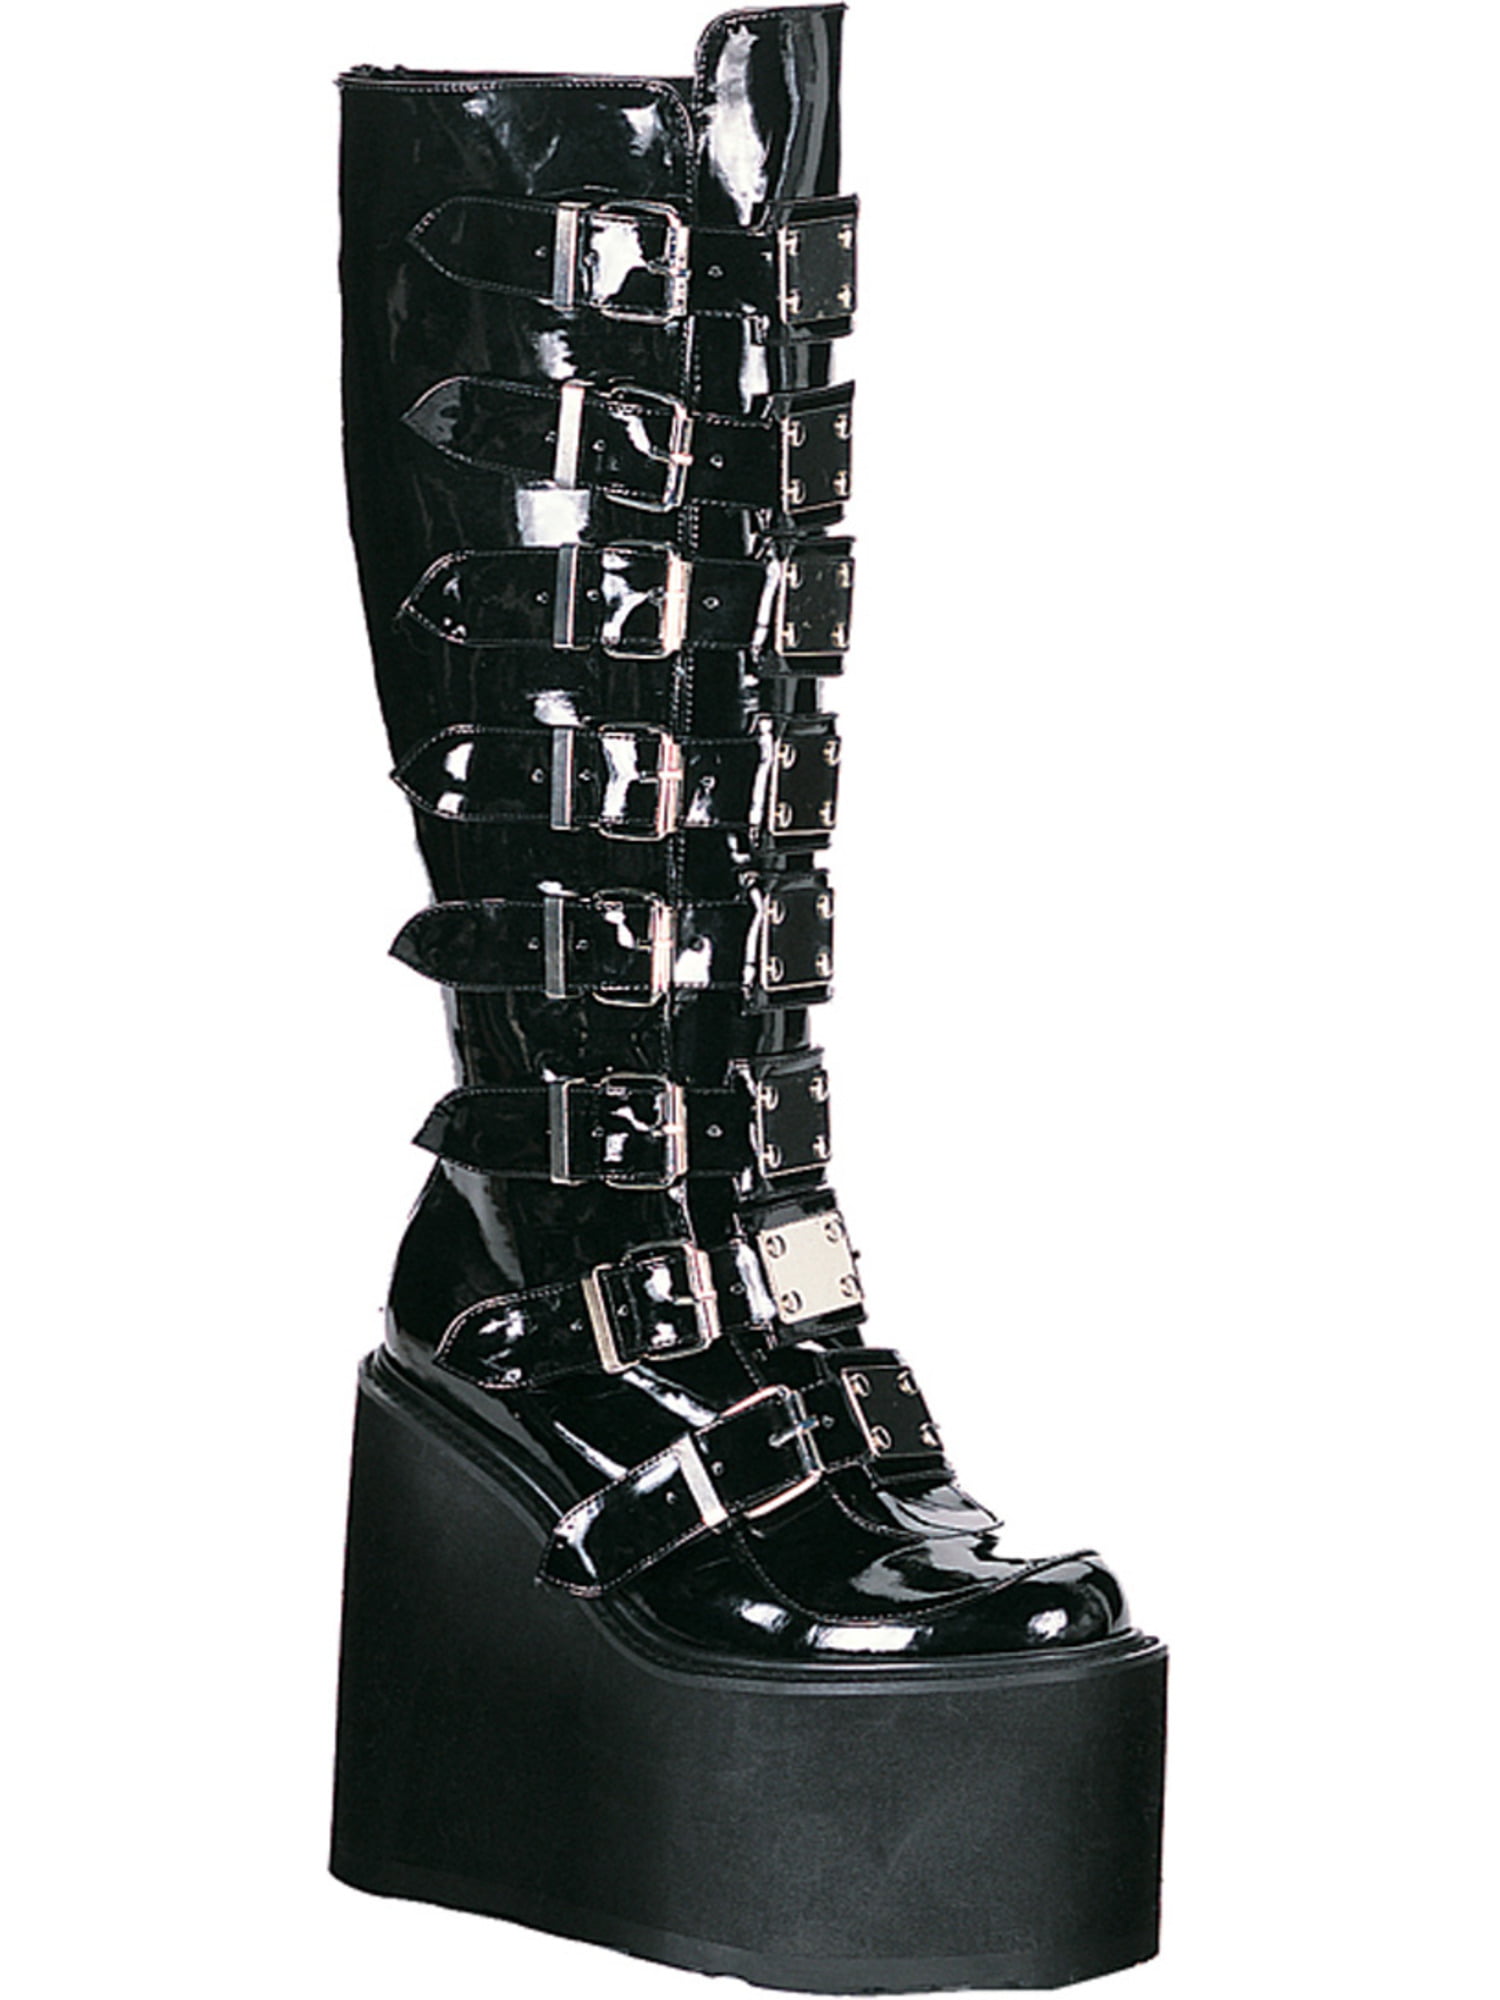 Demonia Black Patent Gothic Boots Metal Buckles Straps 5 1 2 Inch Platform Knee High Walmart